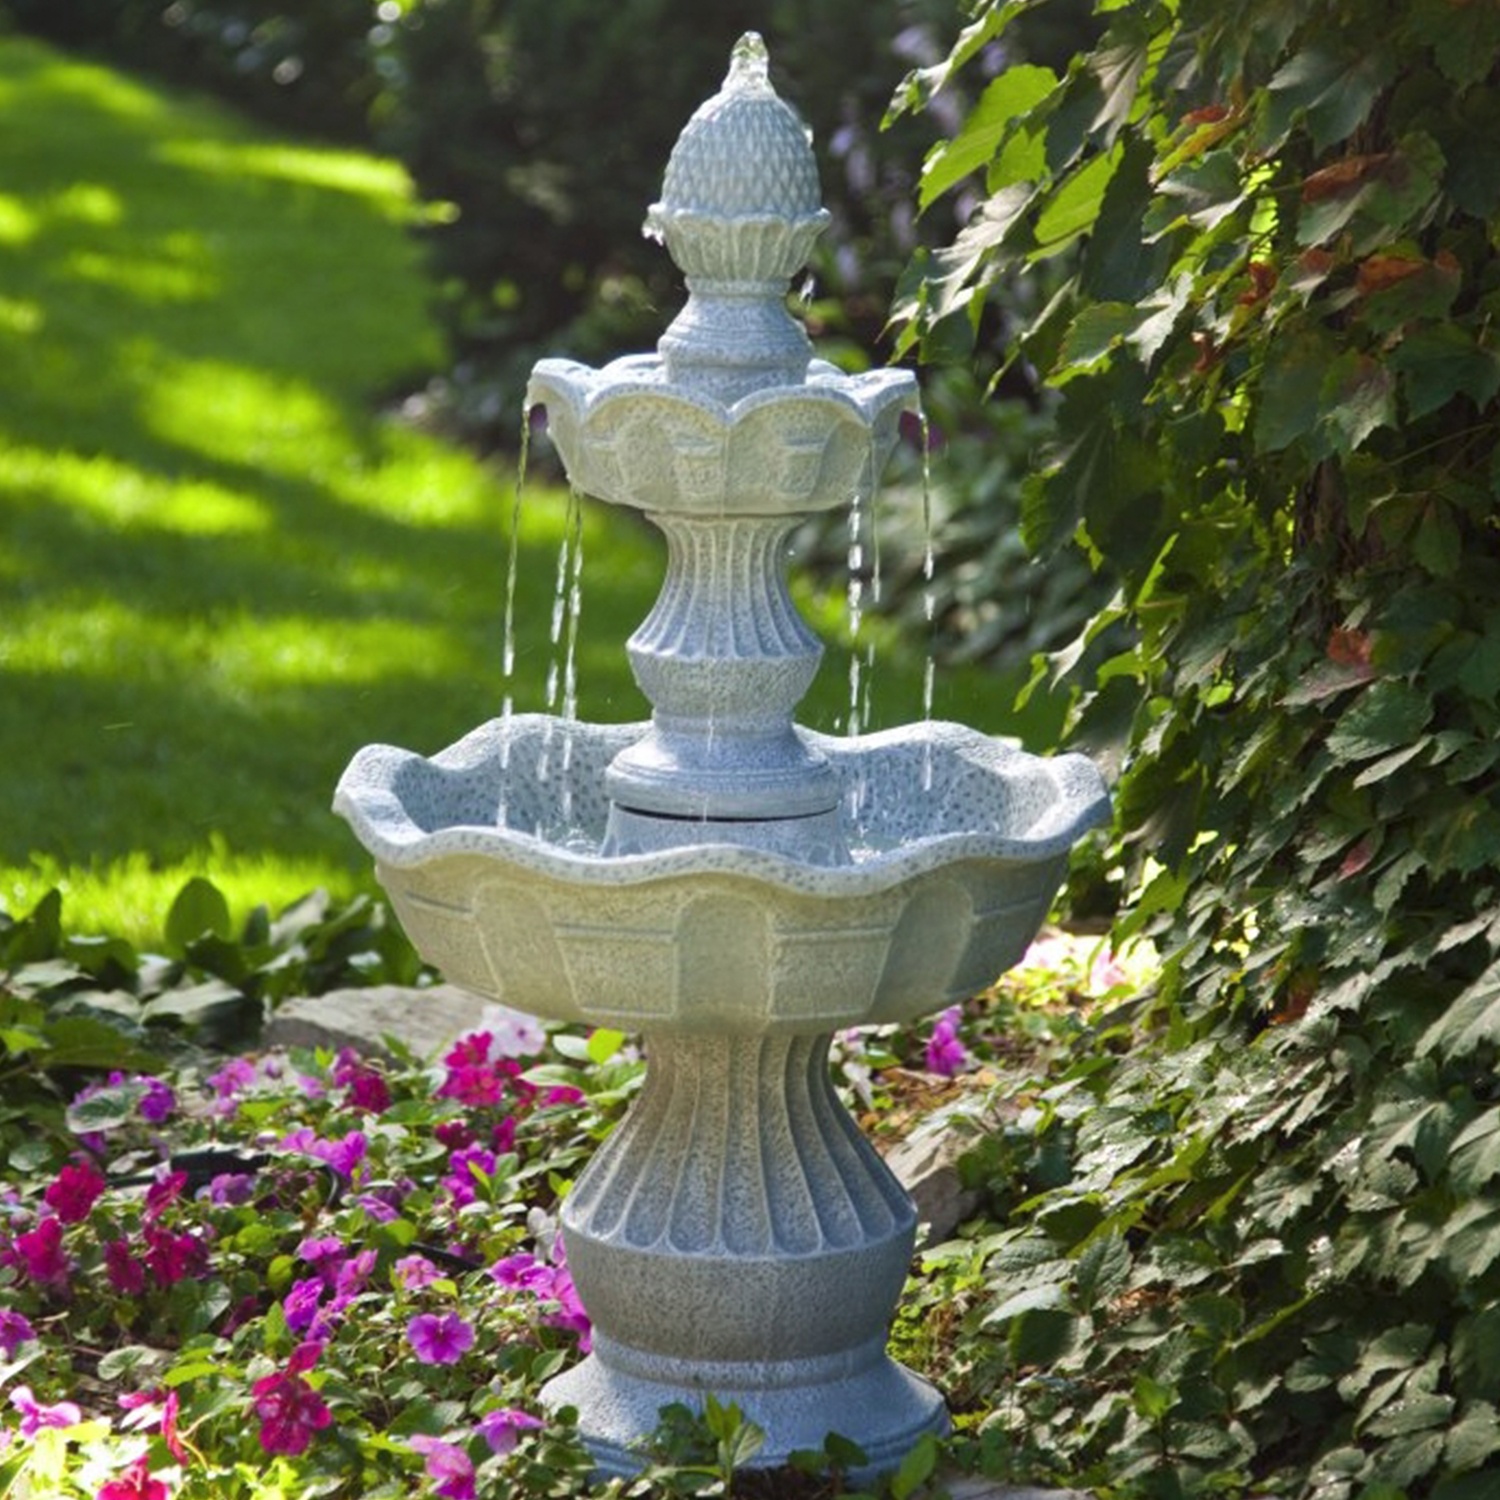  Welcome Garden Pineapple Tiered Outdoor Fountain